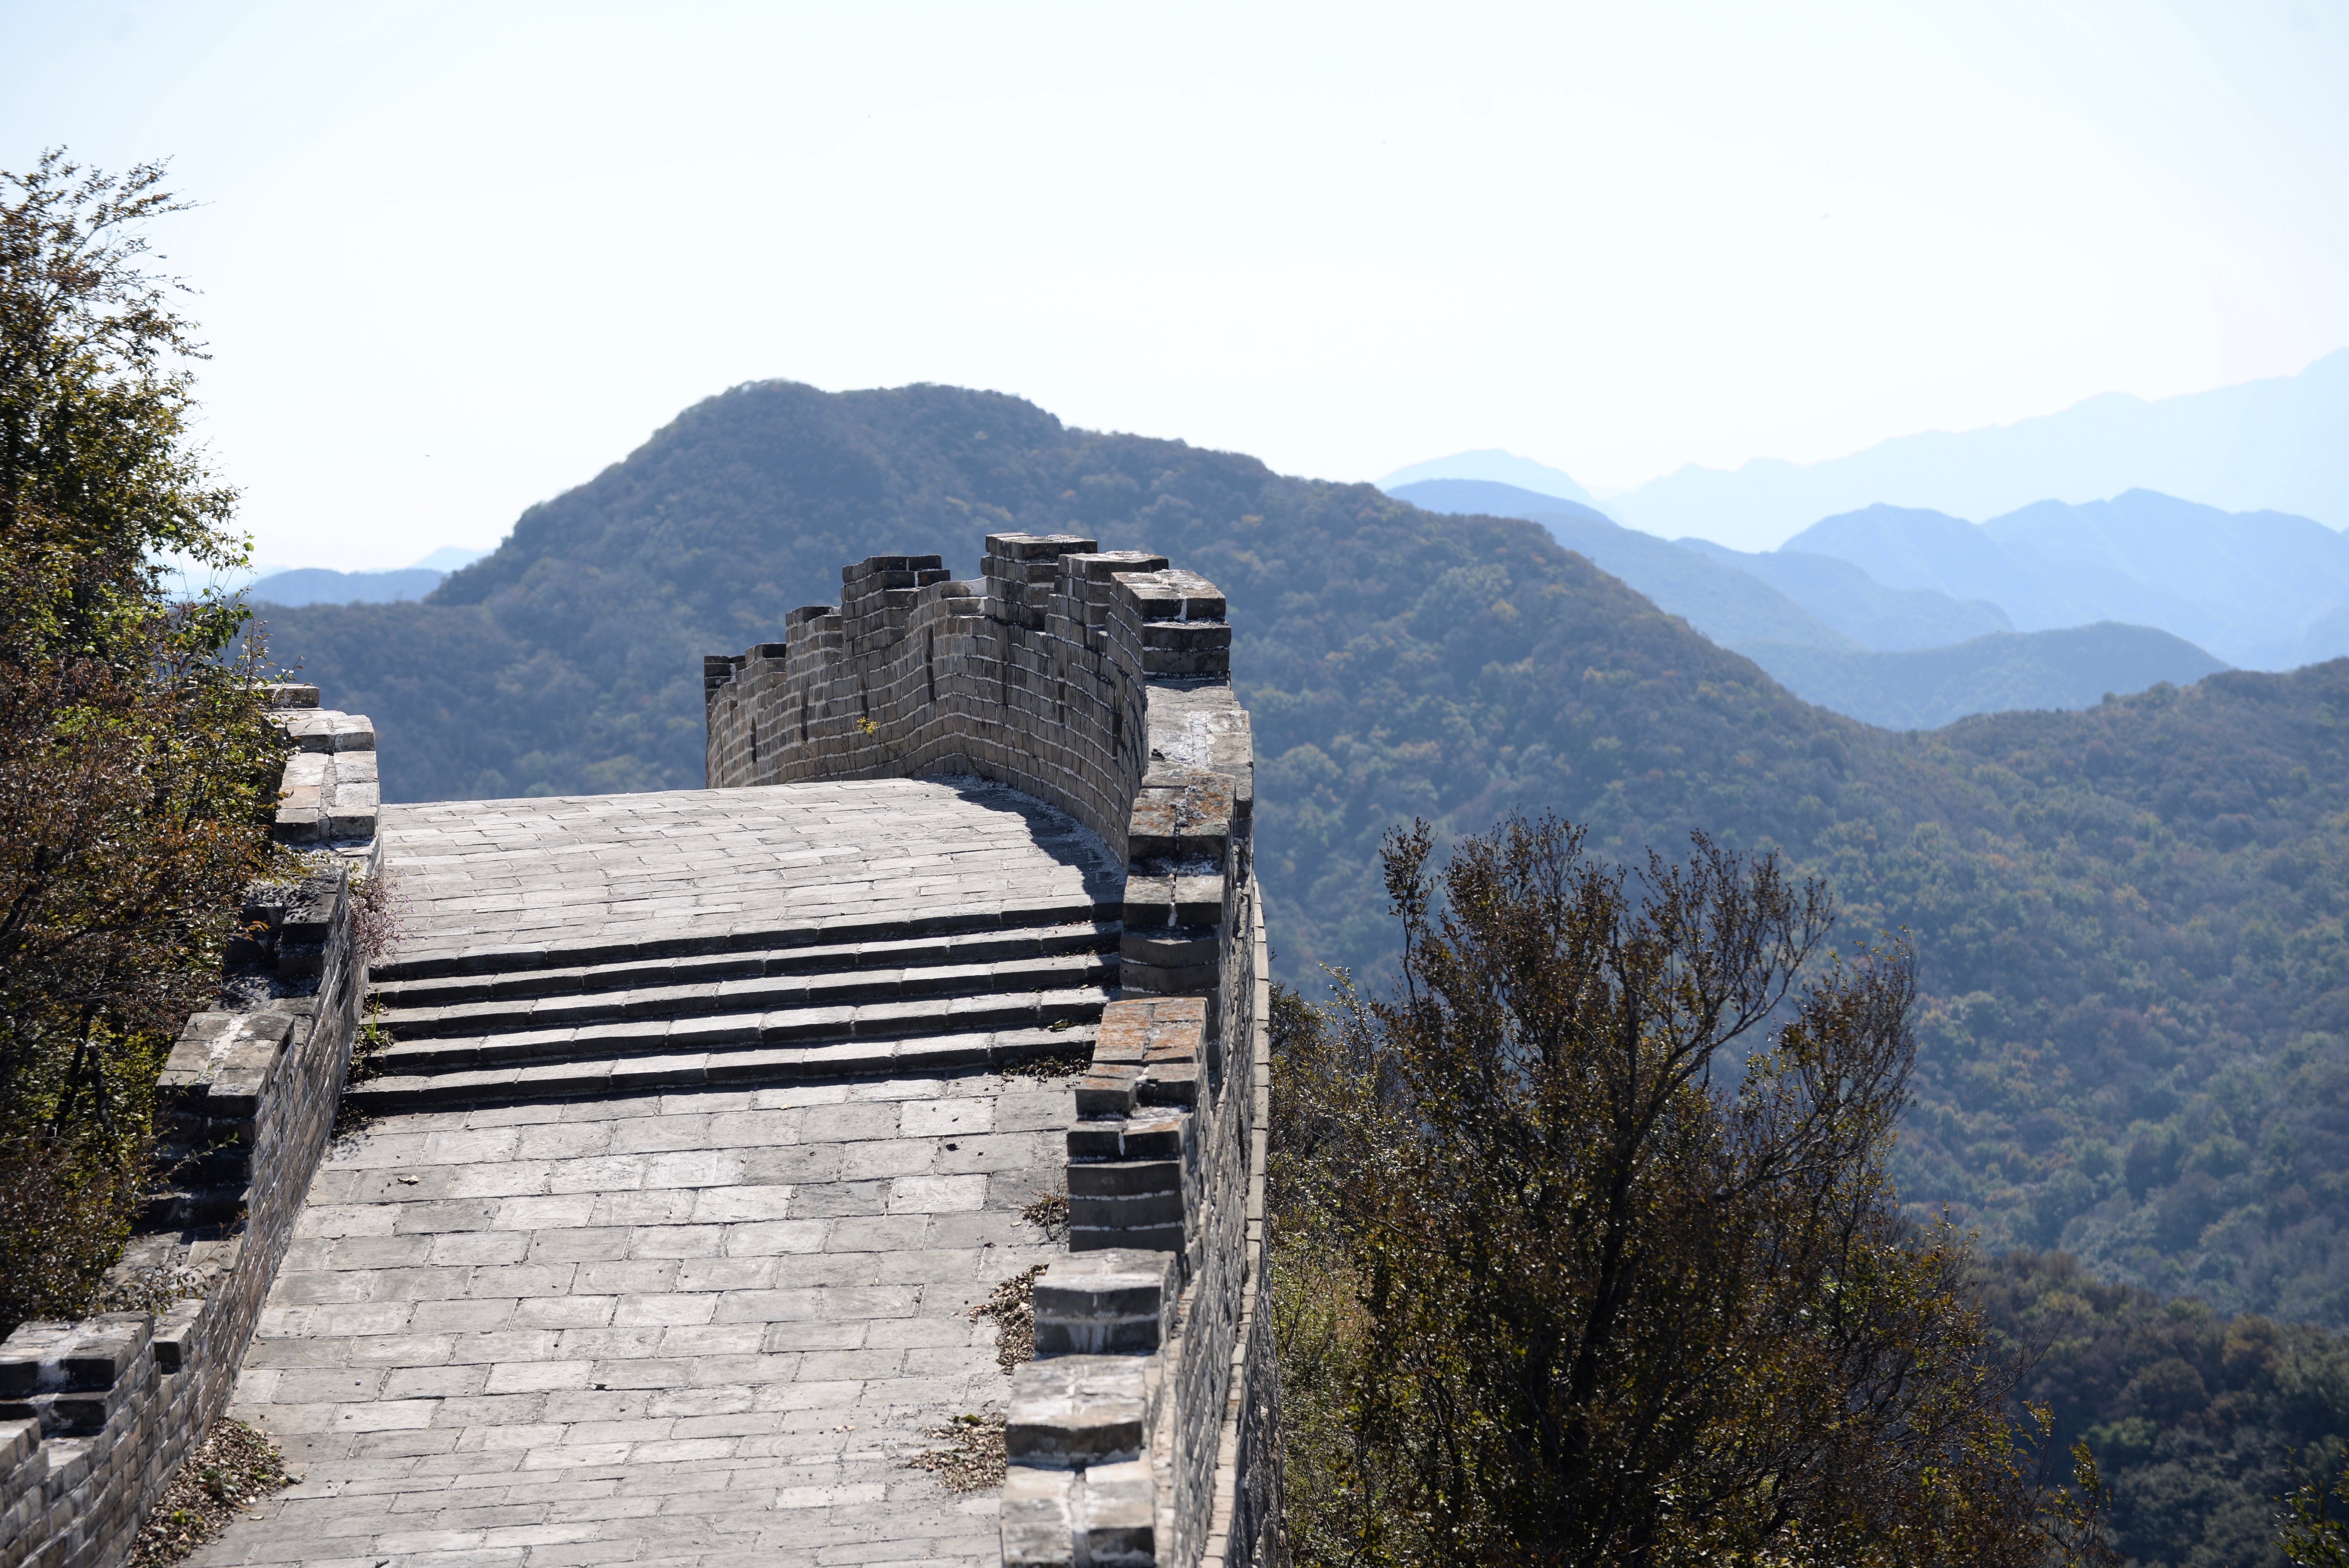 Visit The Great Wall of China